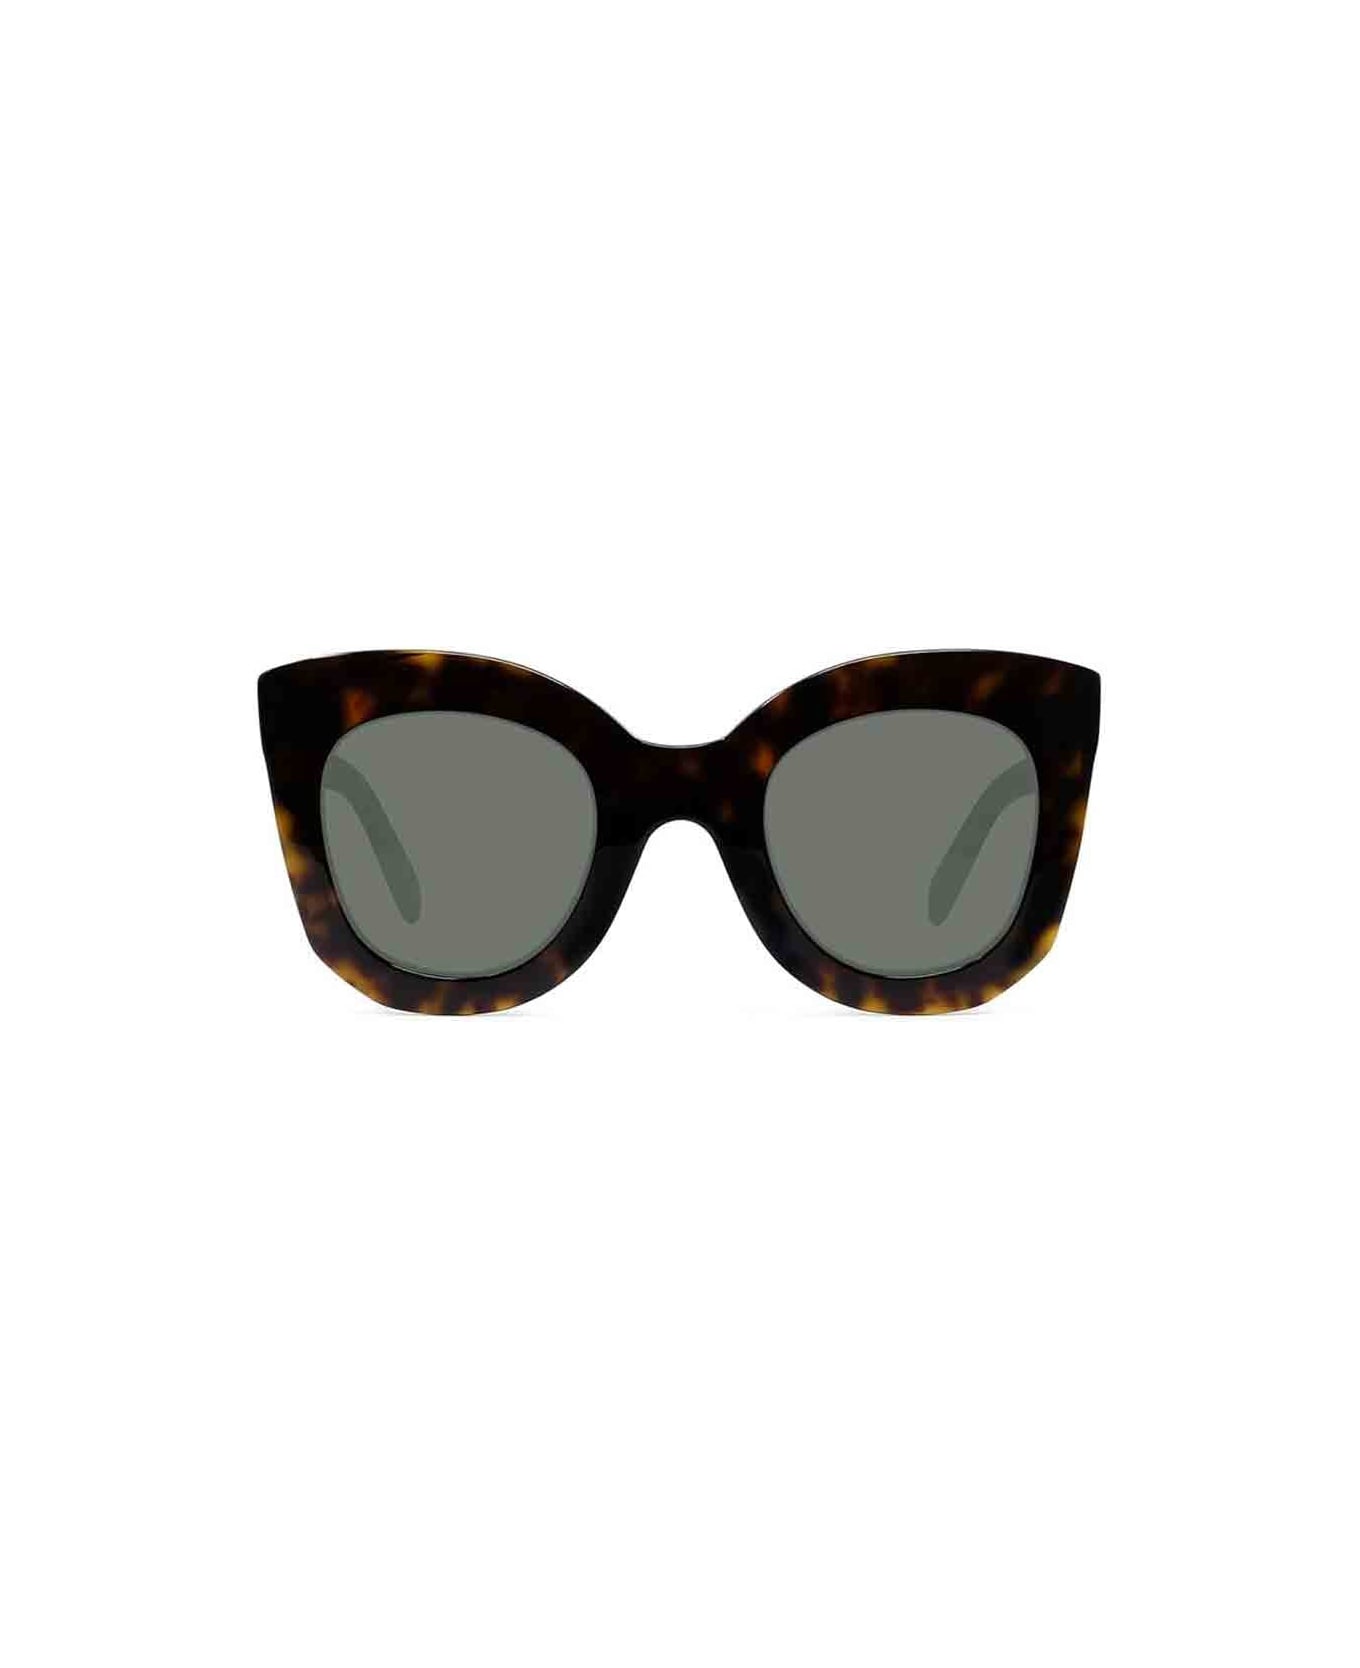 Celine Sunglasses - Marrone tartarugato/Verde